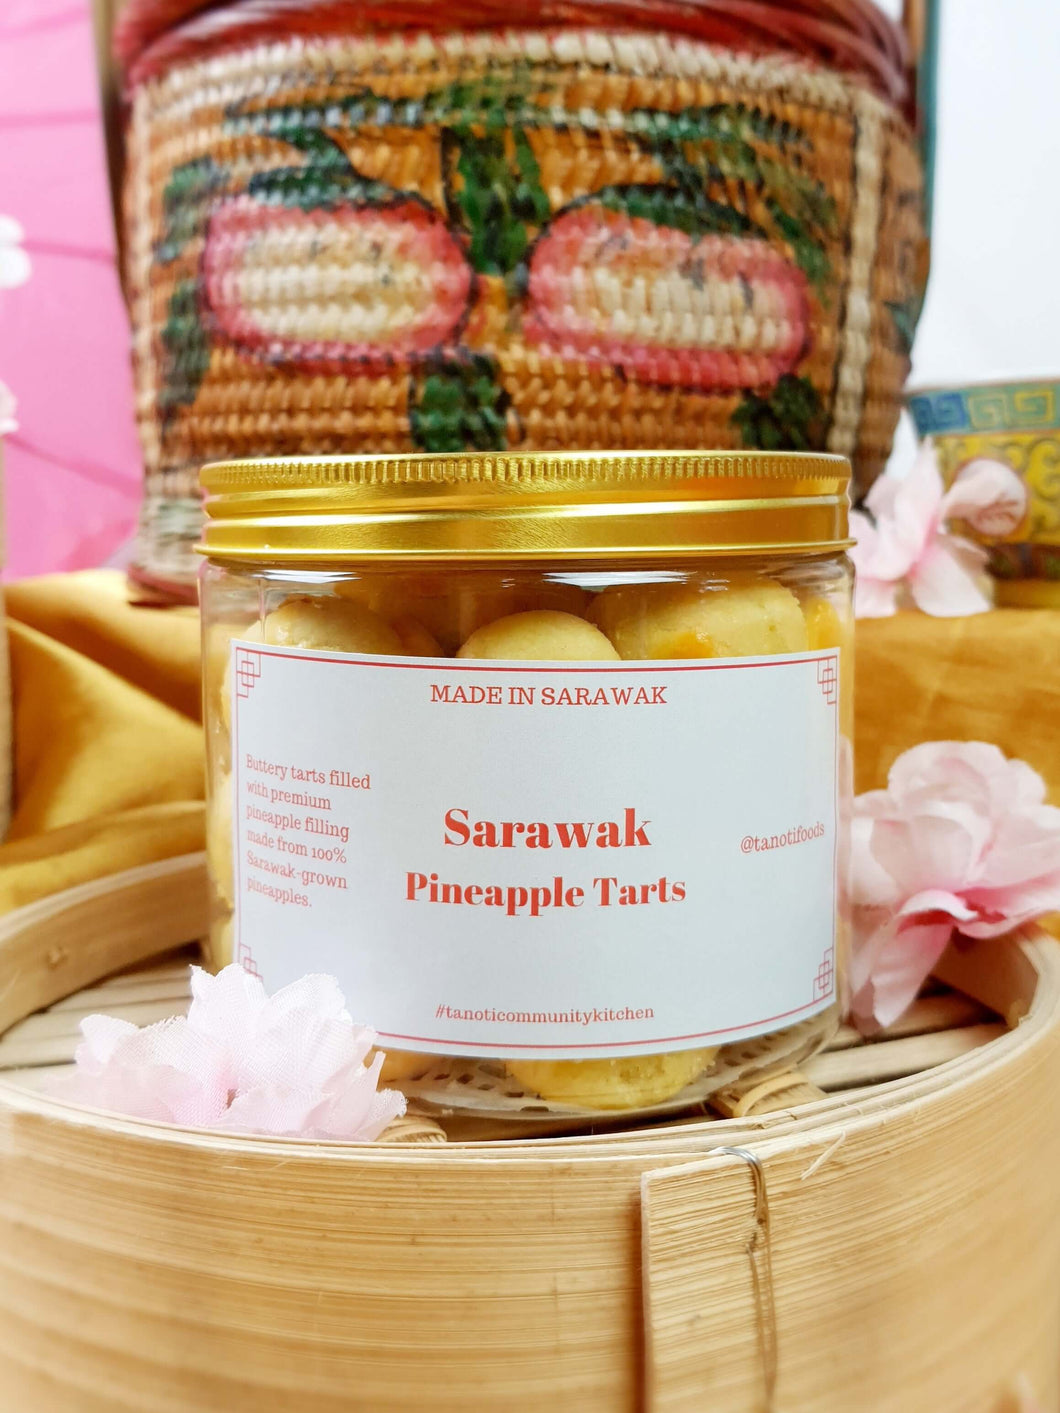 Sarawak Pineapple Tarts